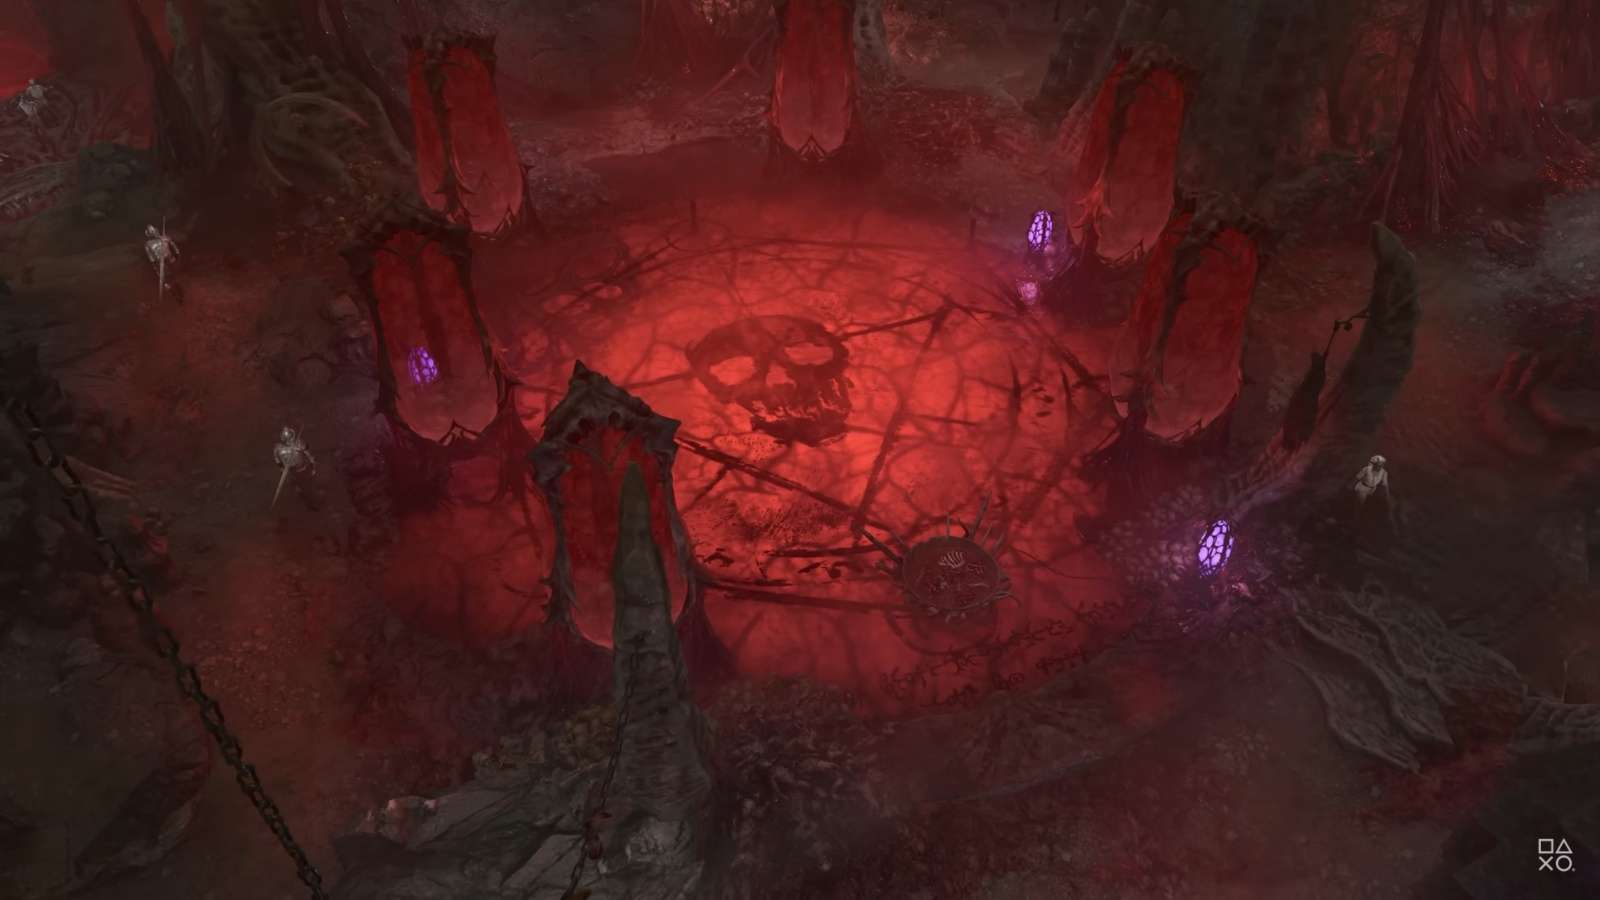 A screenshot from the game Baldur's Gate 3